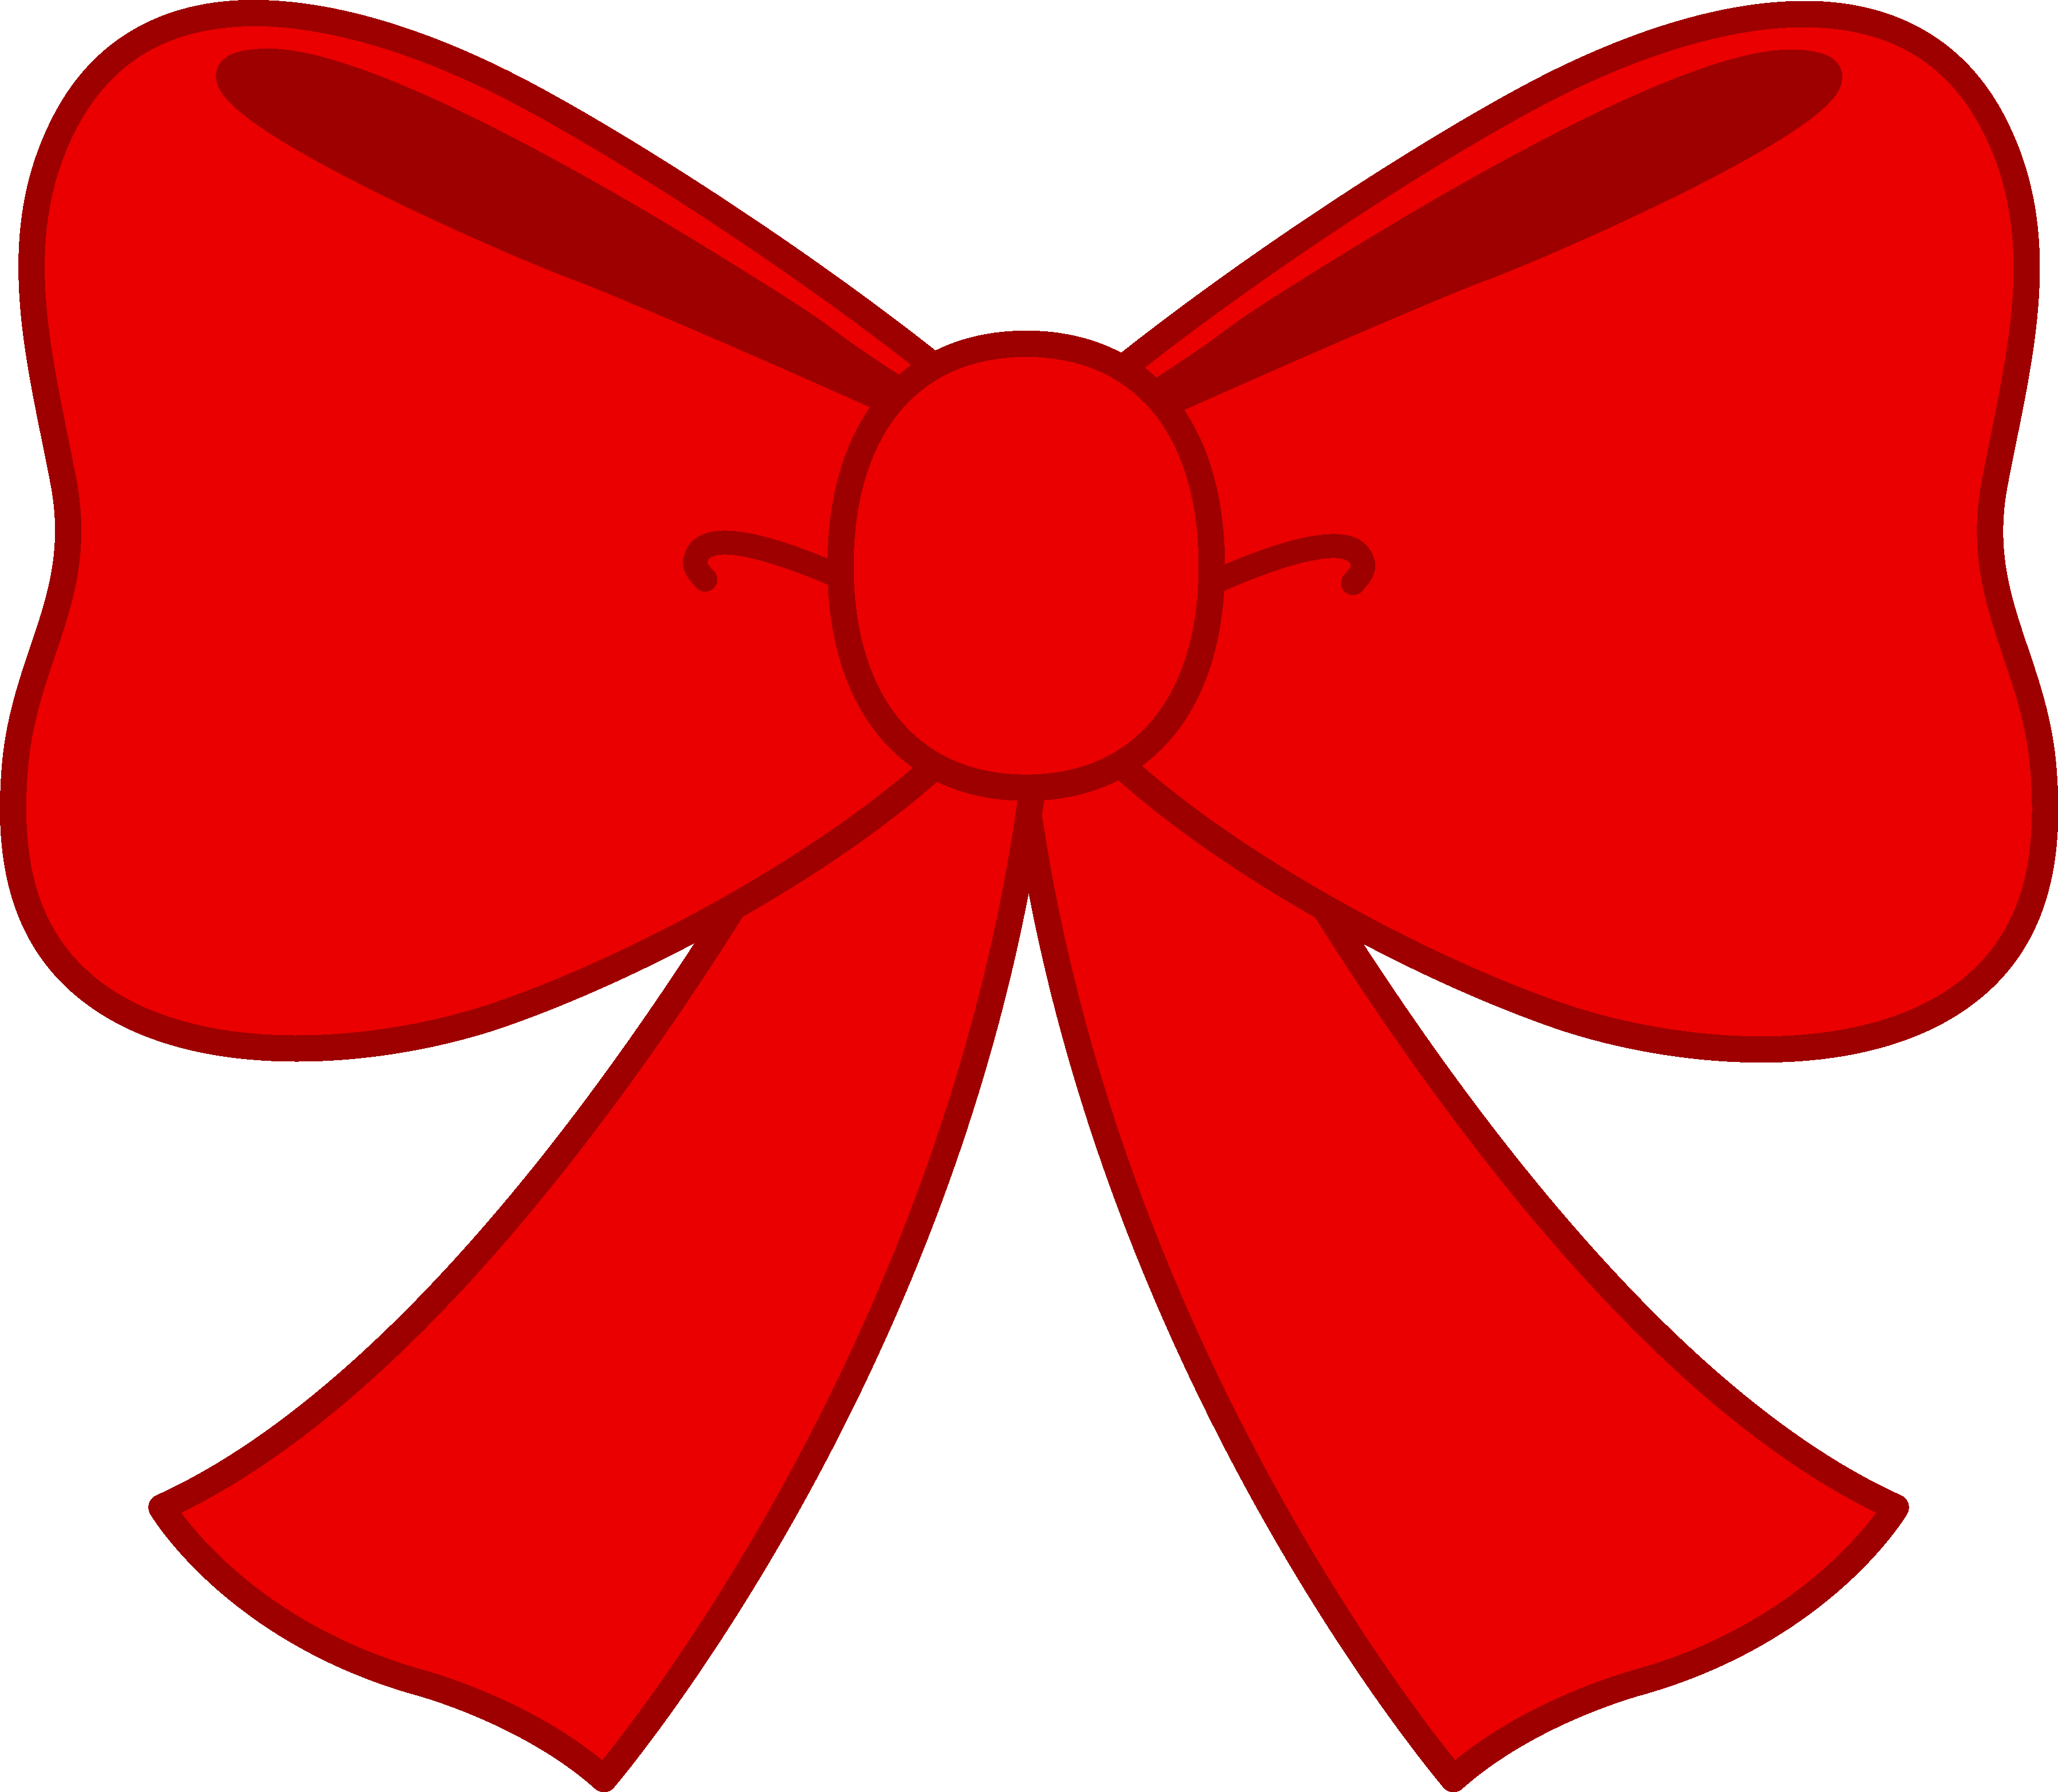 Red Bow Tie Cartoon - ClipArt Best